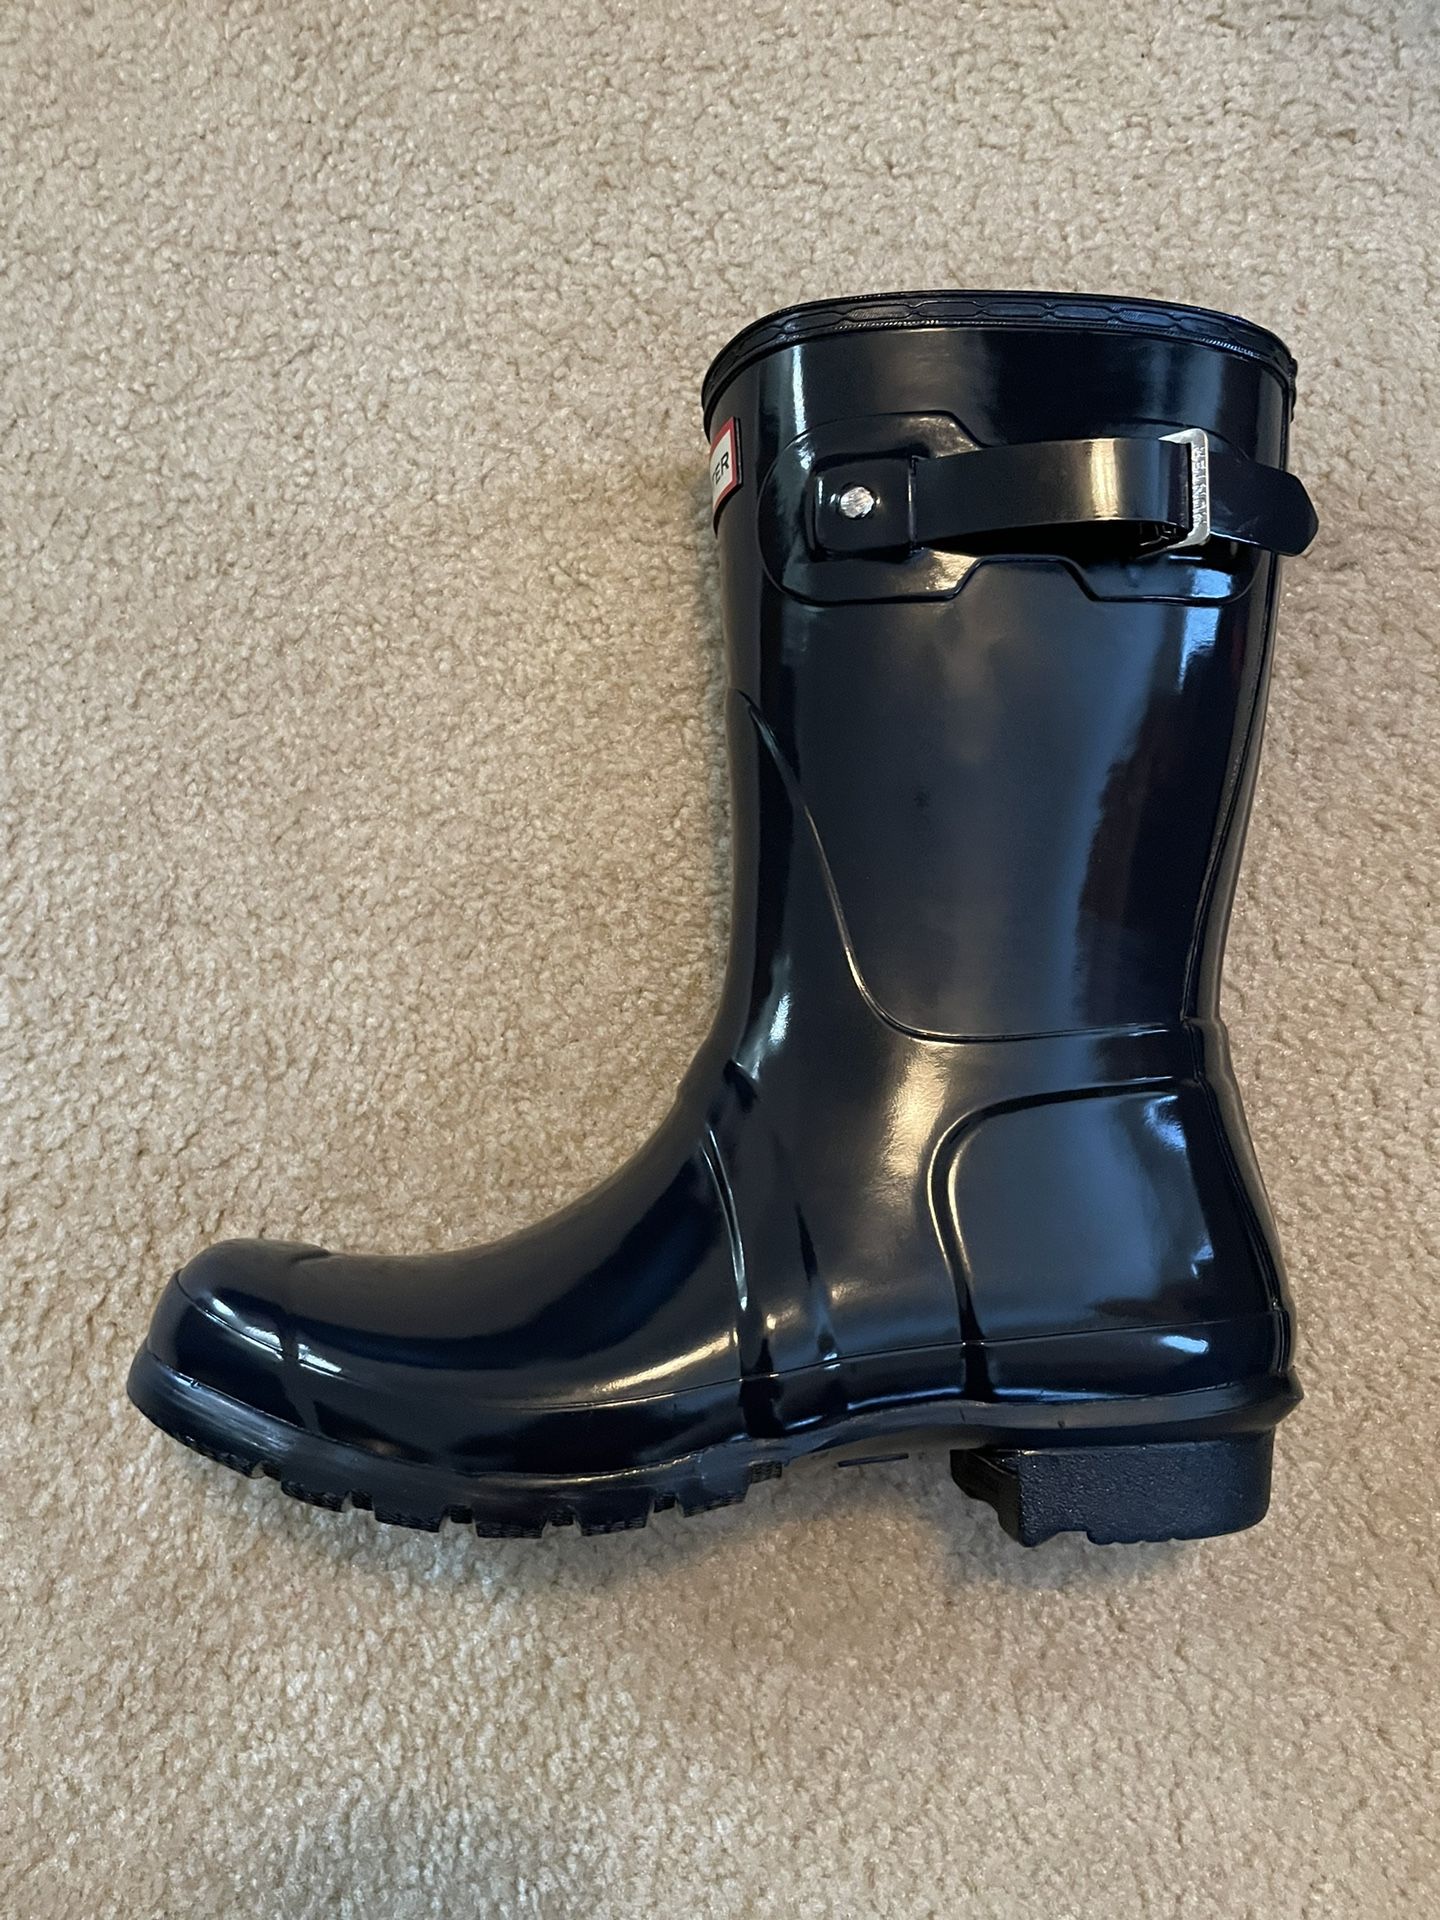 Women’s Hunter Rain boots Size 10 $75 OBO